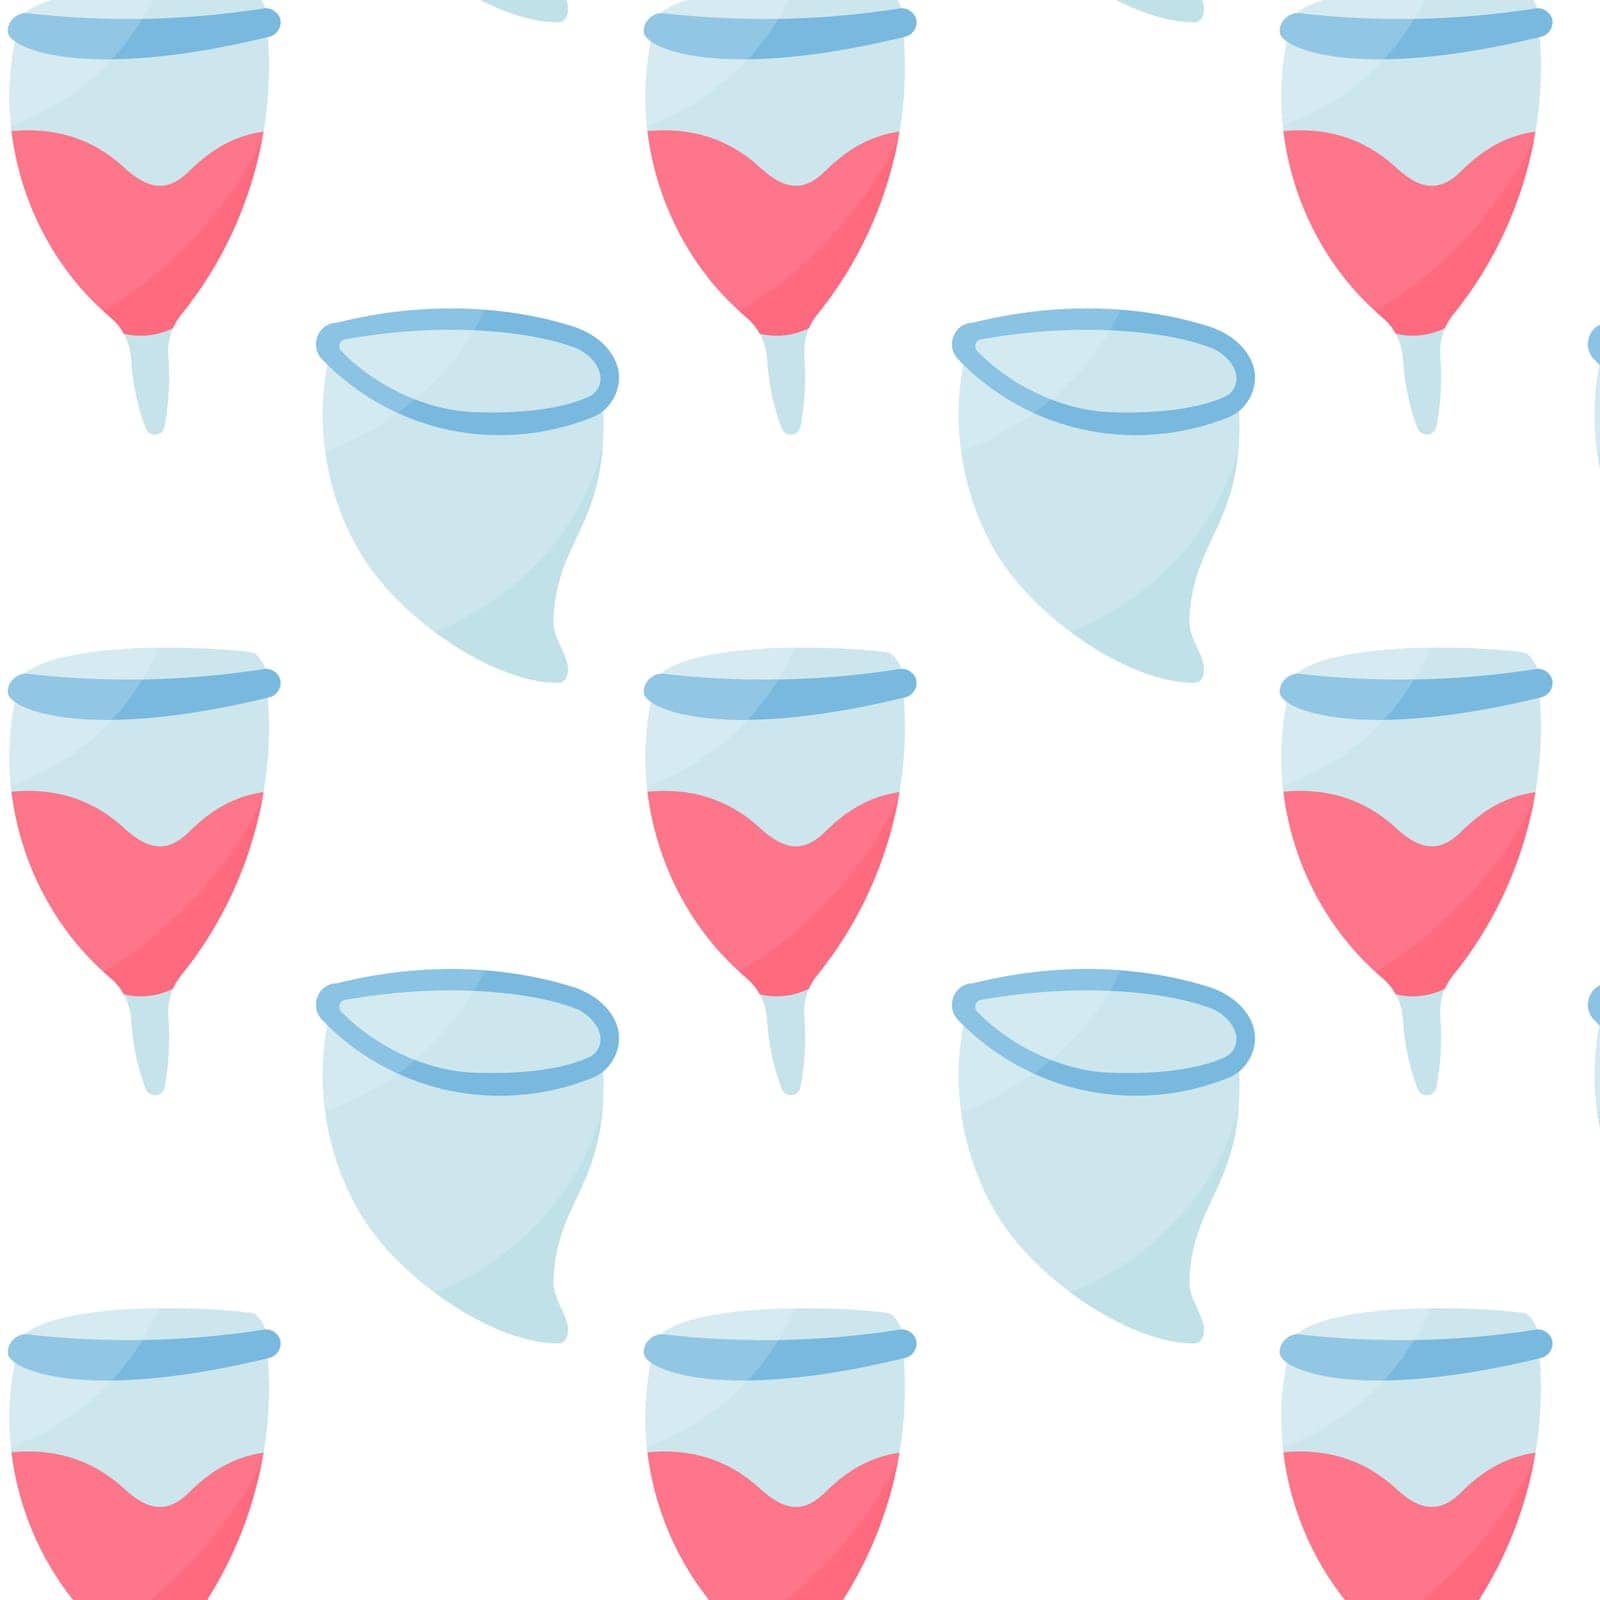 menstrual cup blood feminine hygiene zero wast by kristushka_15_108